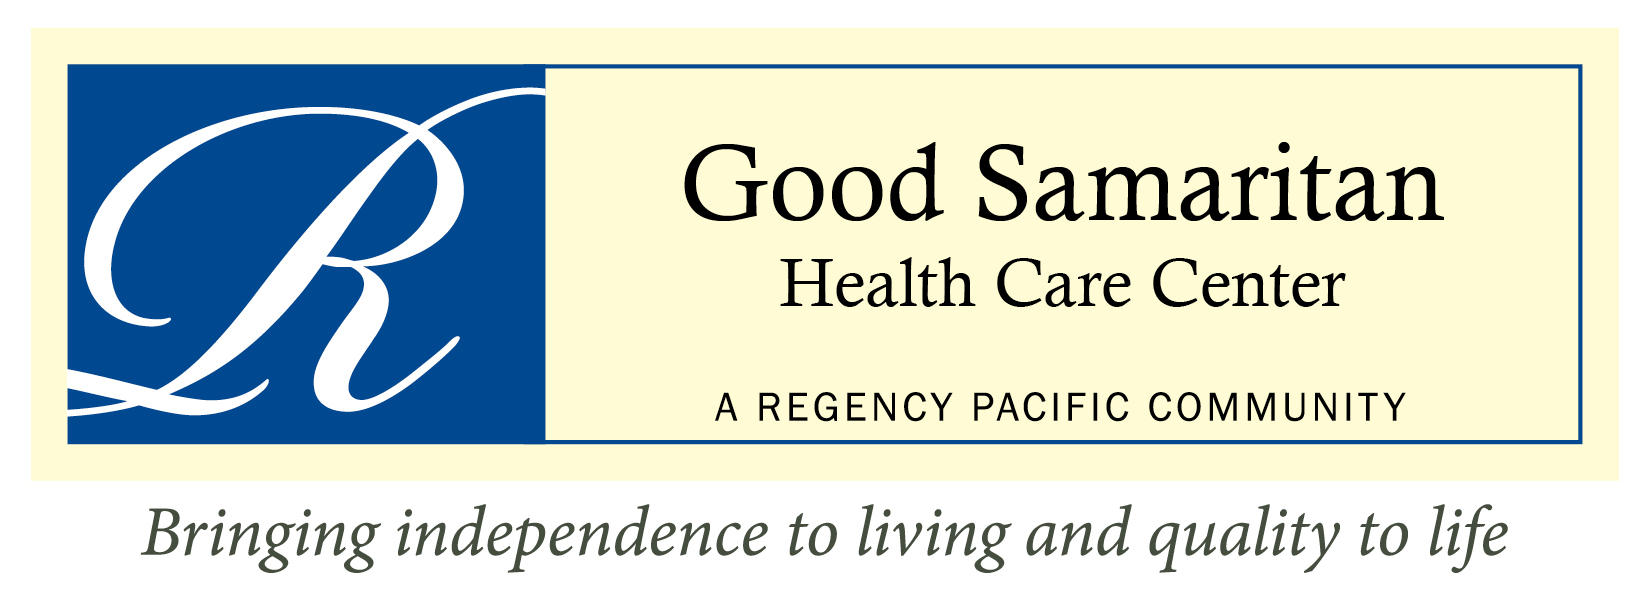 C. Good Samaritan Healthcare Center (Tier 4)